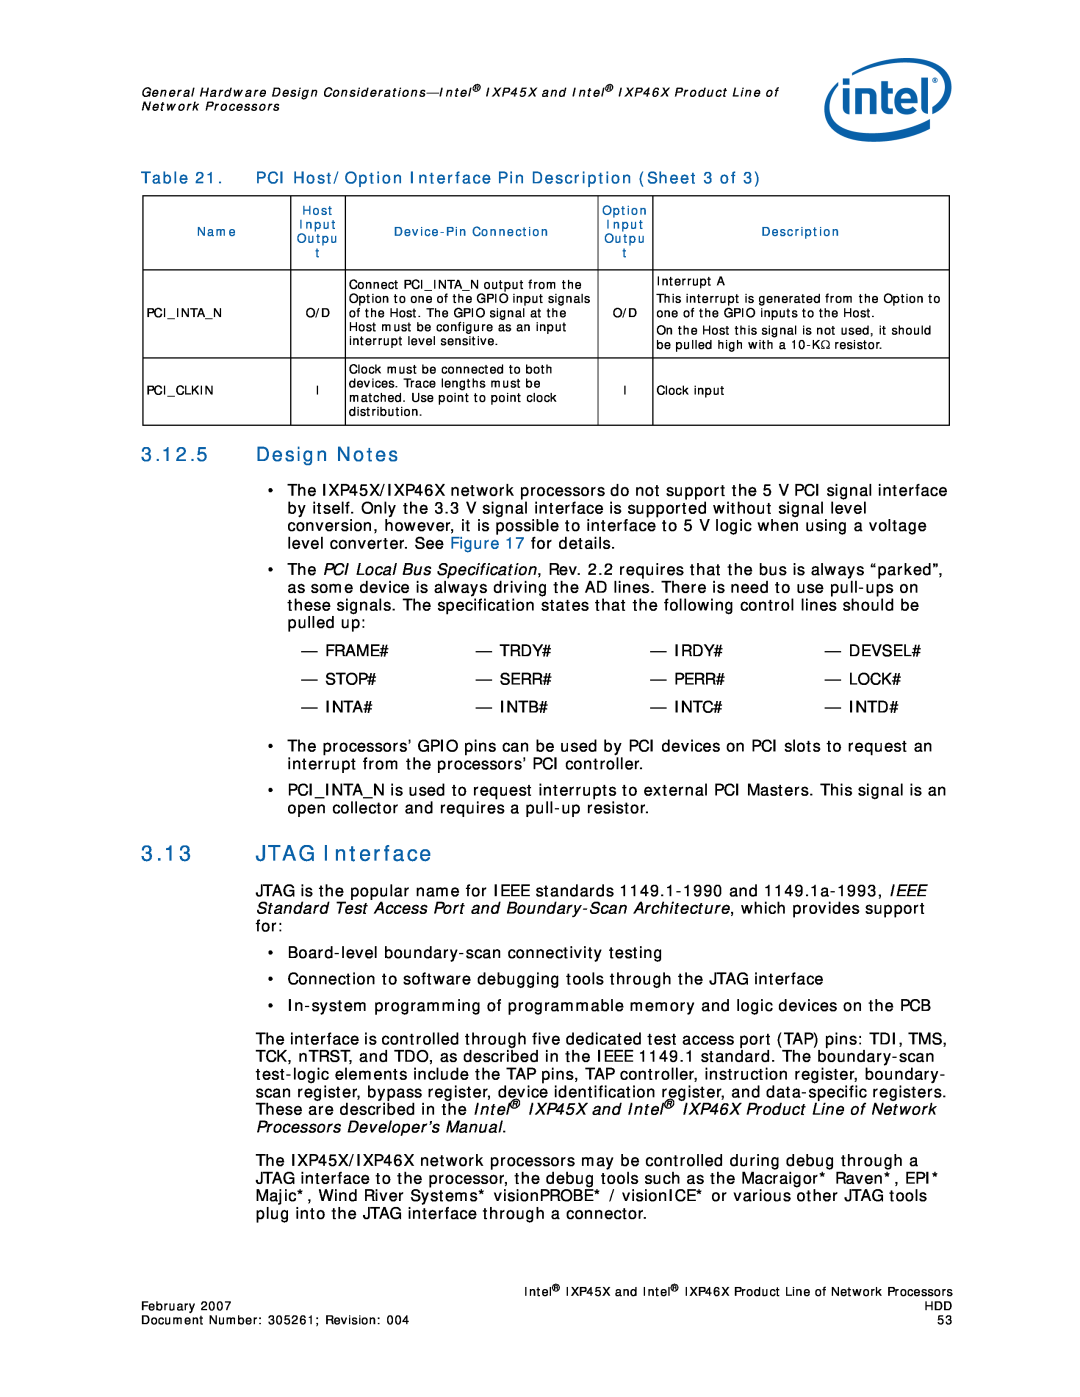 Intel IXP45X, IXP46X manual 3.13JTAG Interface, 3.12.5Design Notes 